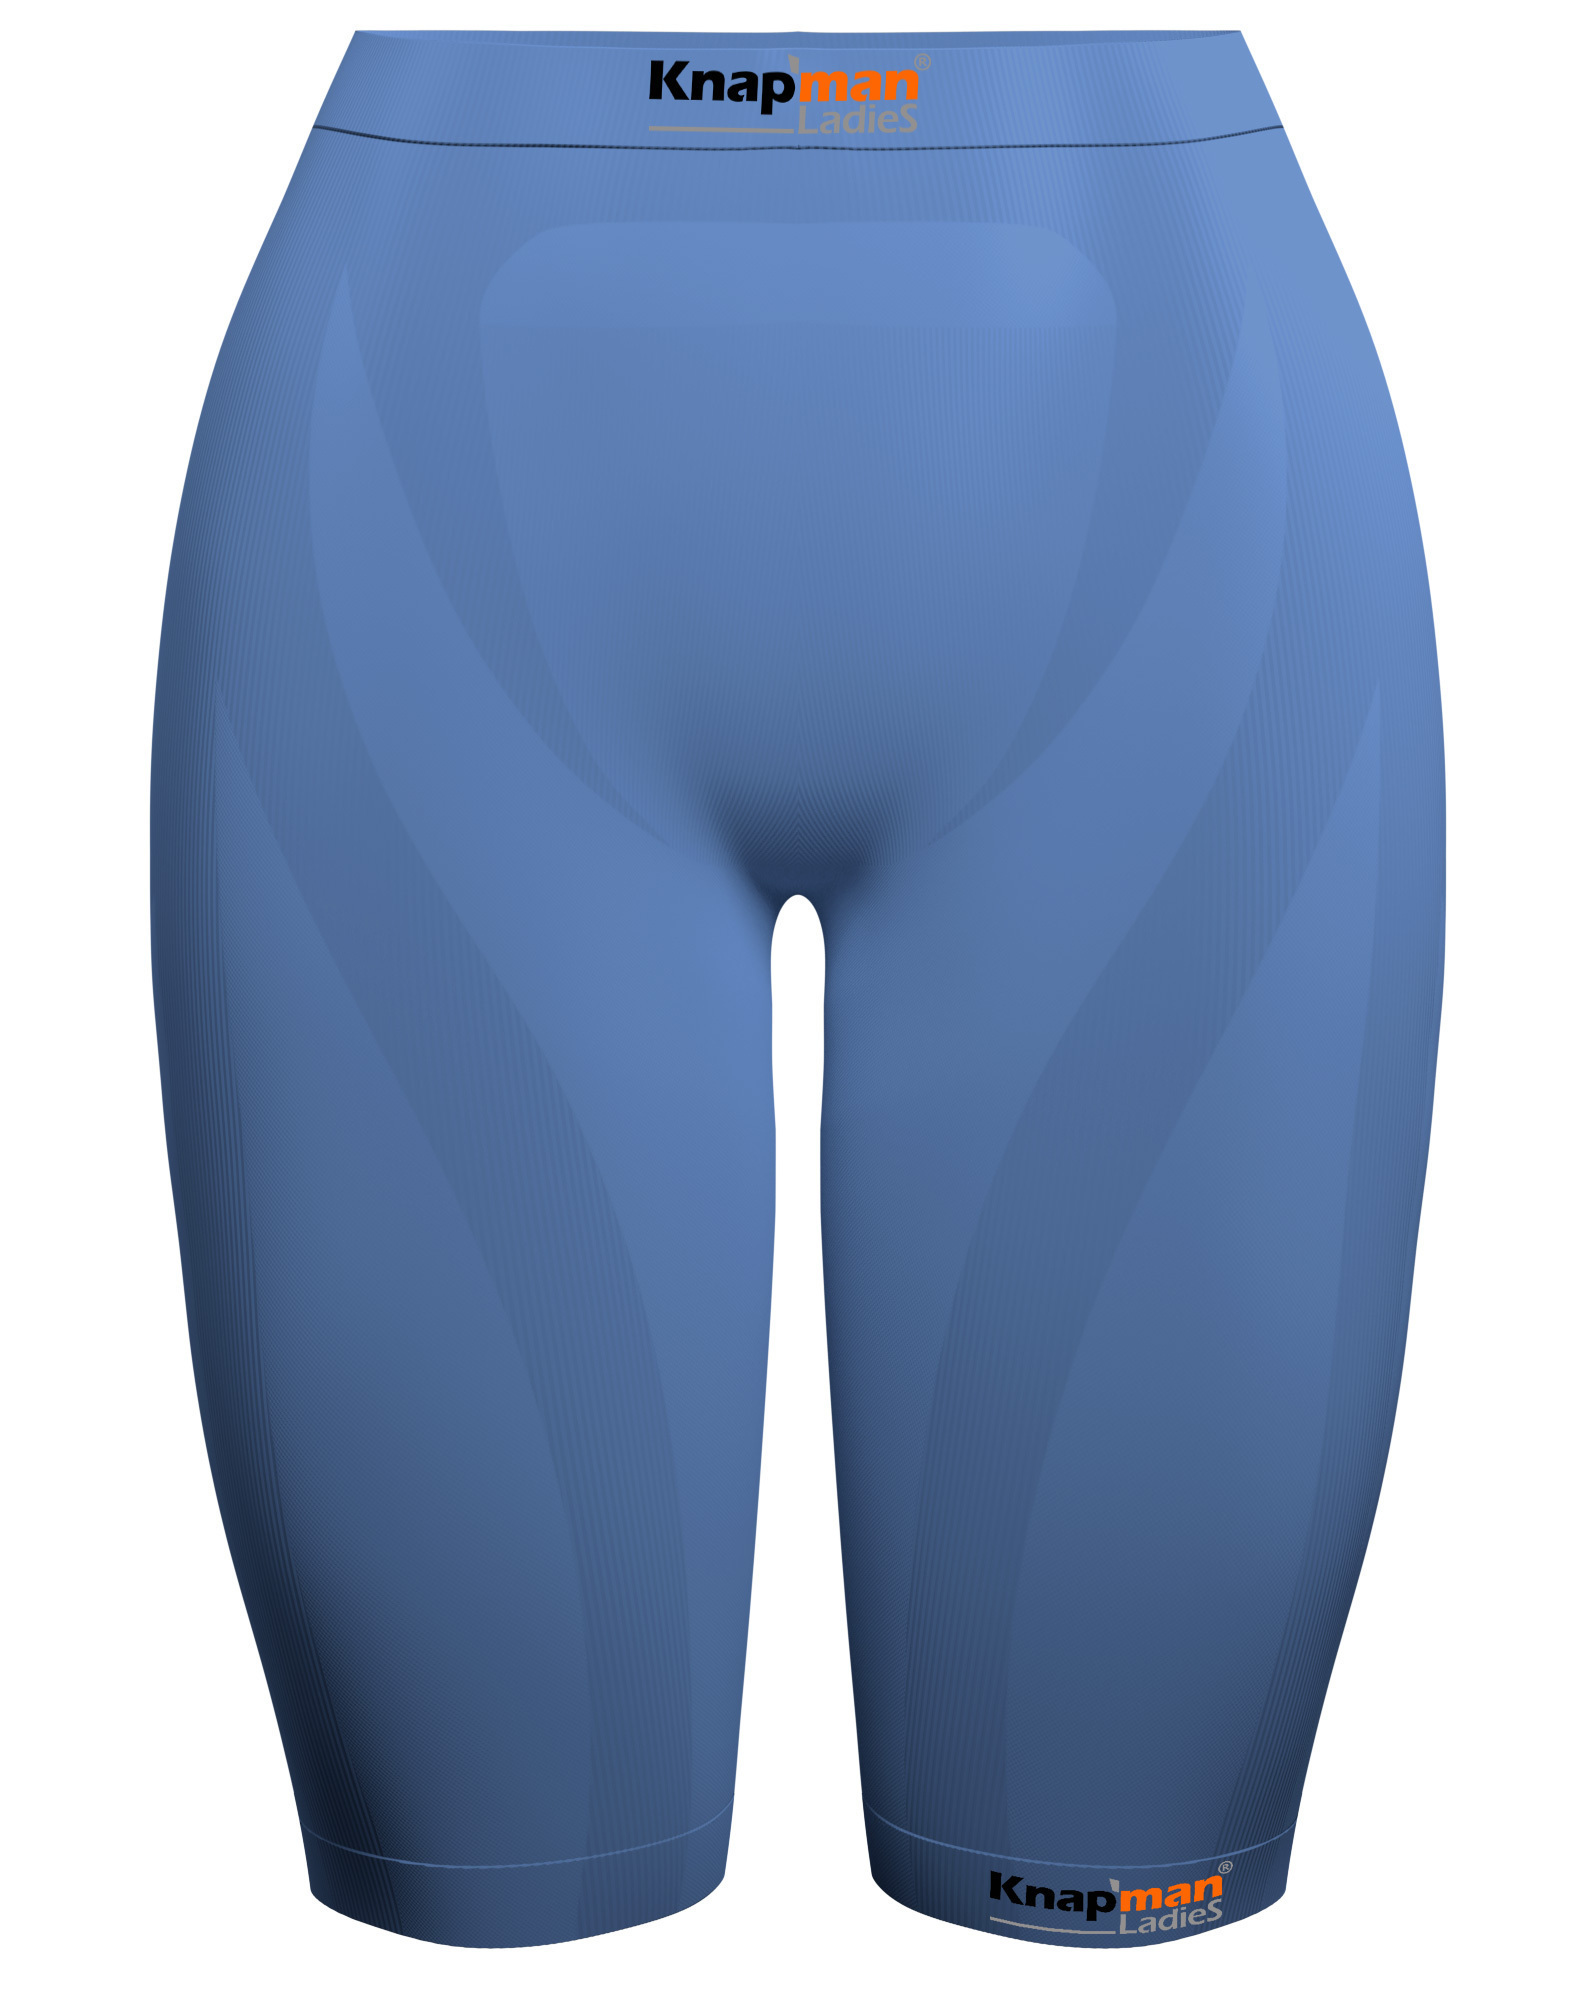 Knap'man Women's Compression Shorts Light Blue - 45%